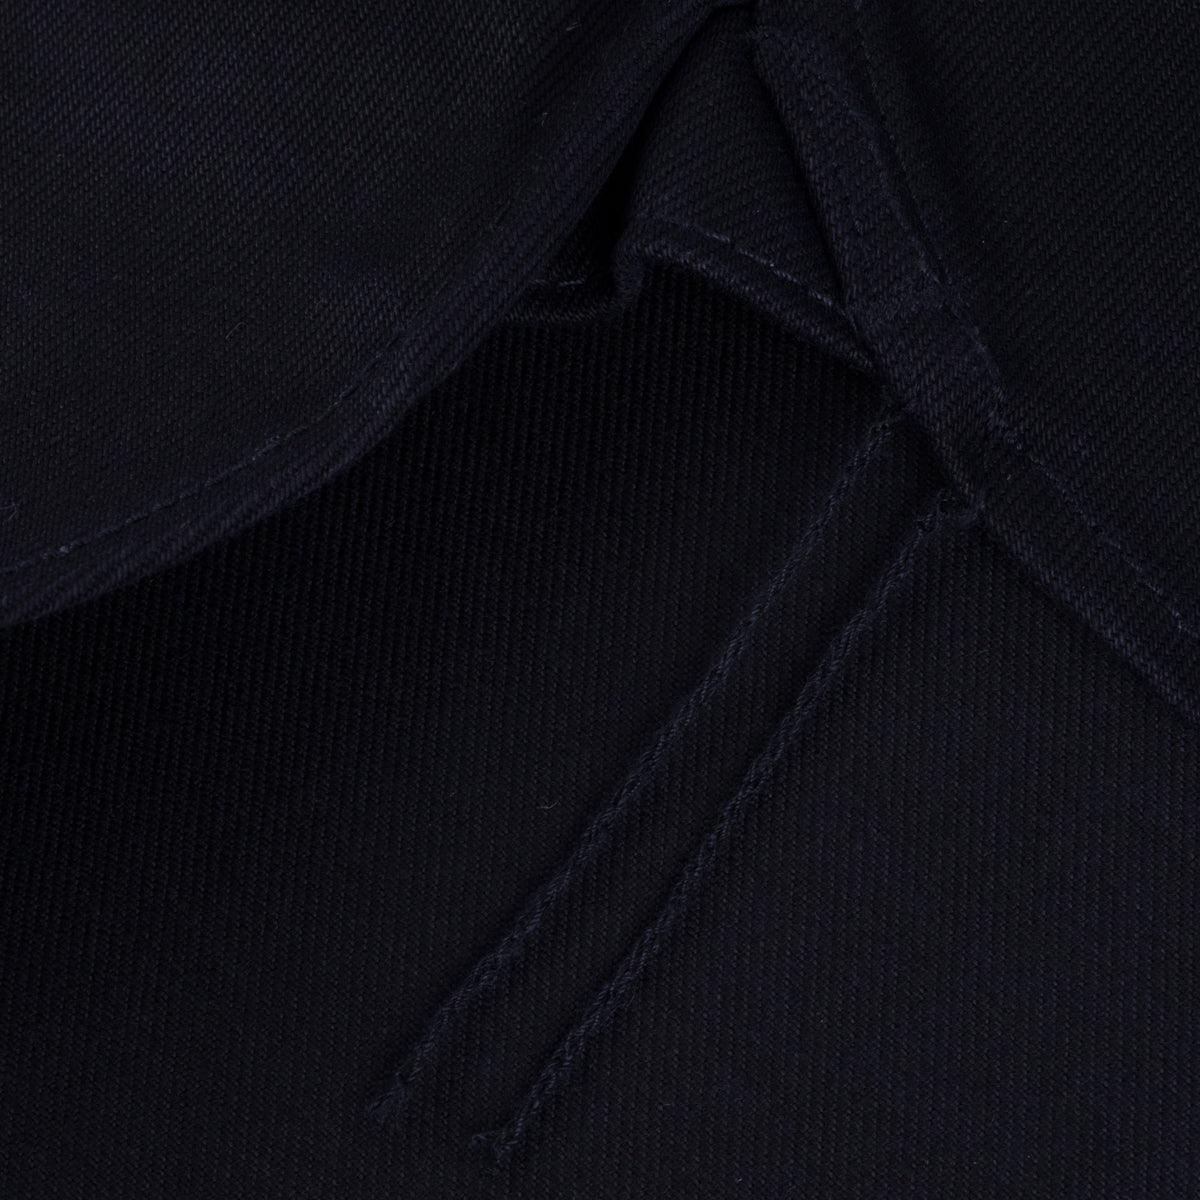 IHSH-362-SBG - 16oz Non-Selvedge Denim CPO Shirt - Superblack (Fades to Grey)